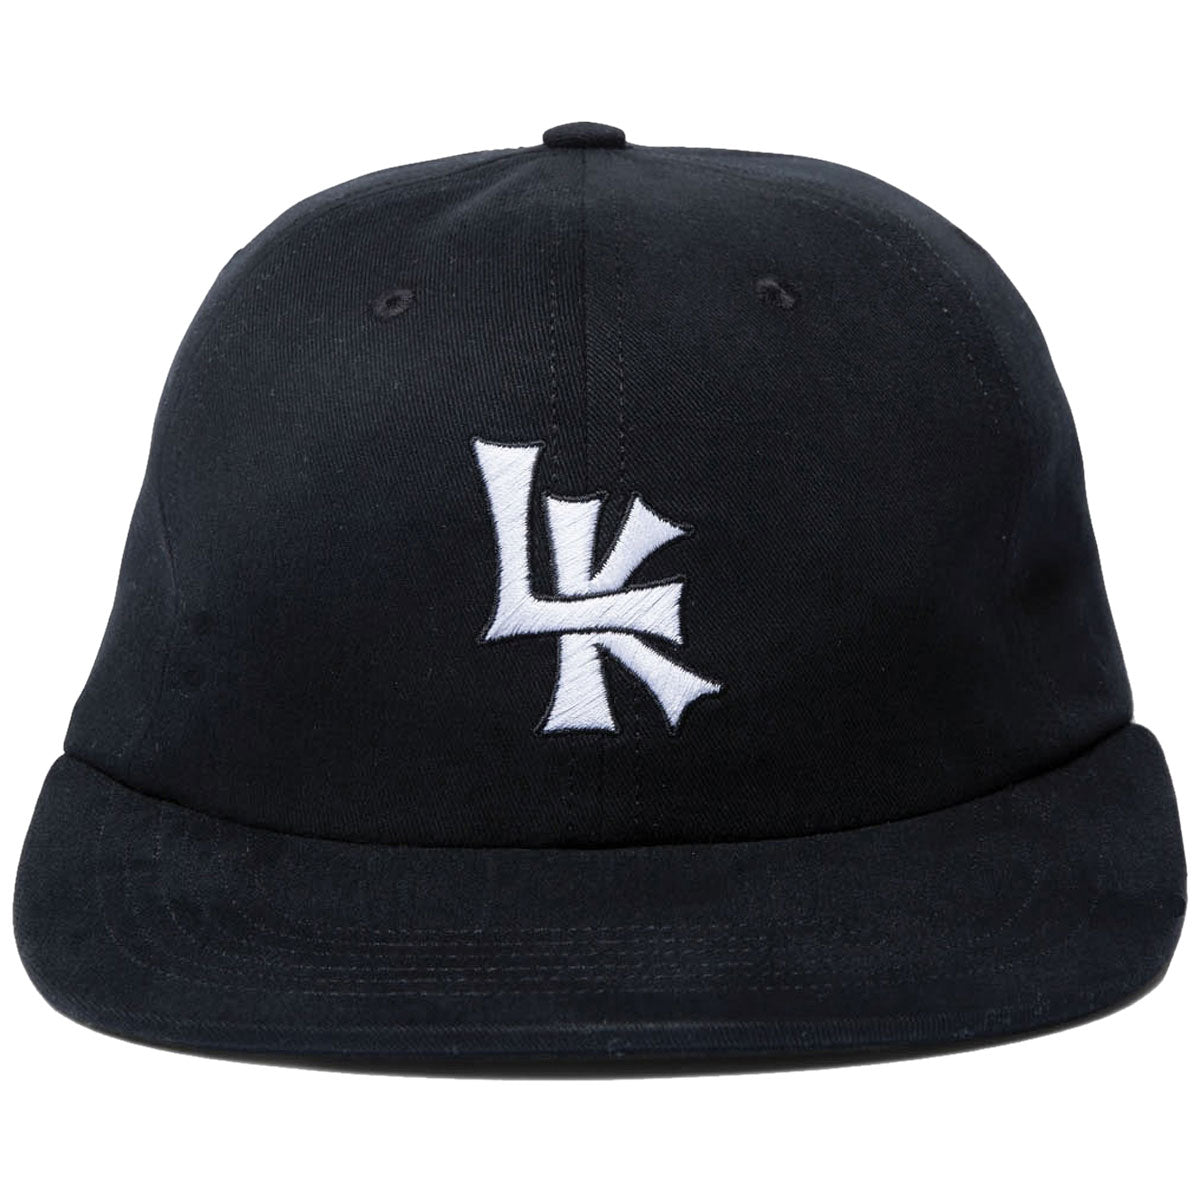 Lakai Fielder Snapback Hat - Black image 3